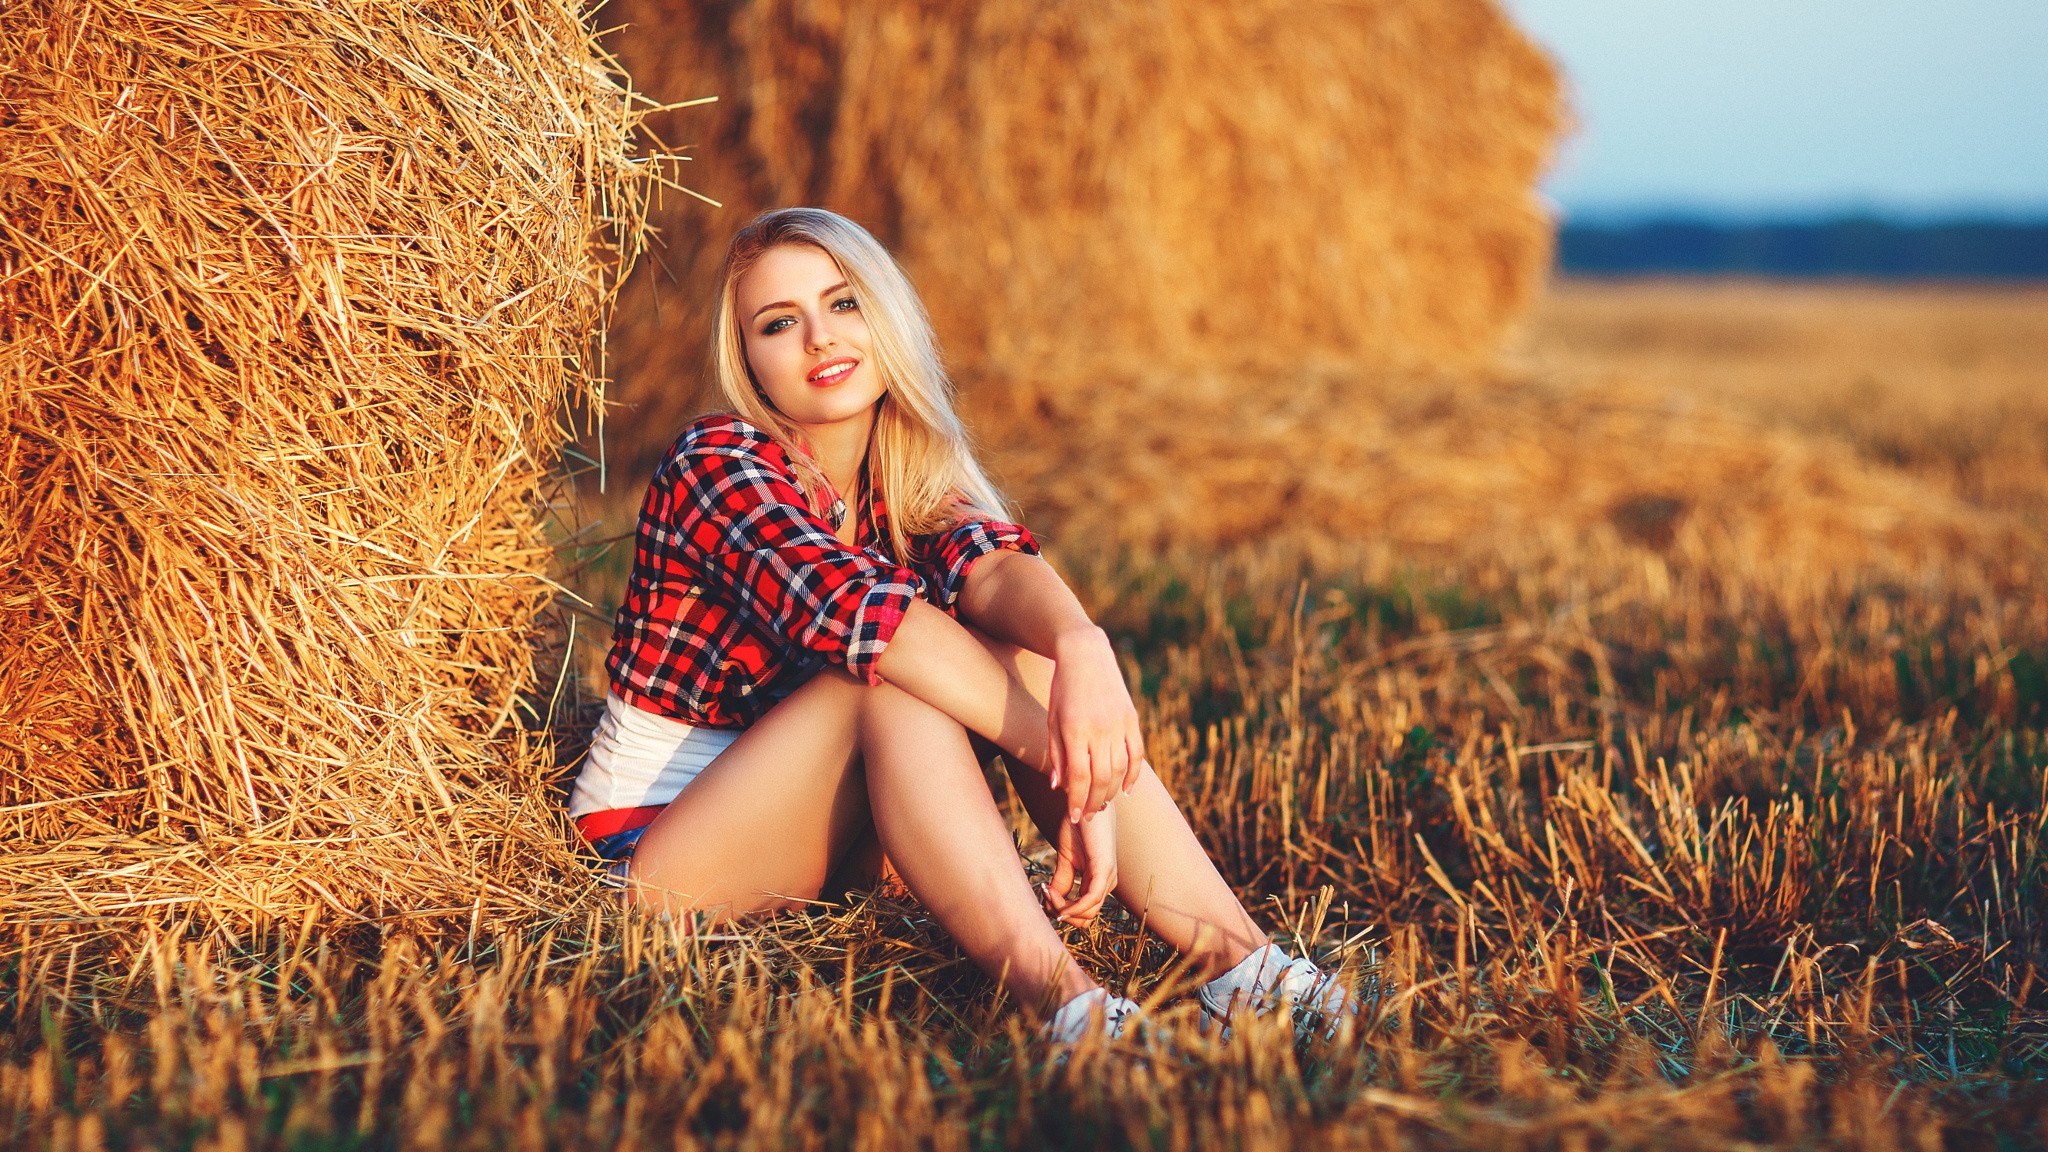 model, women, blonde, haystack